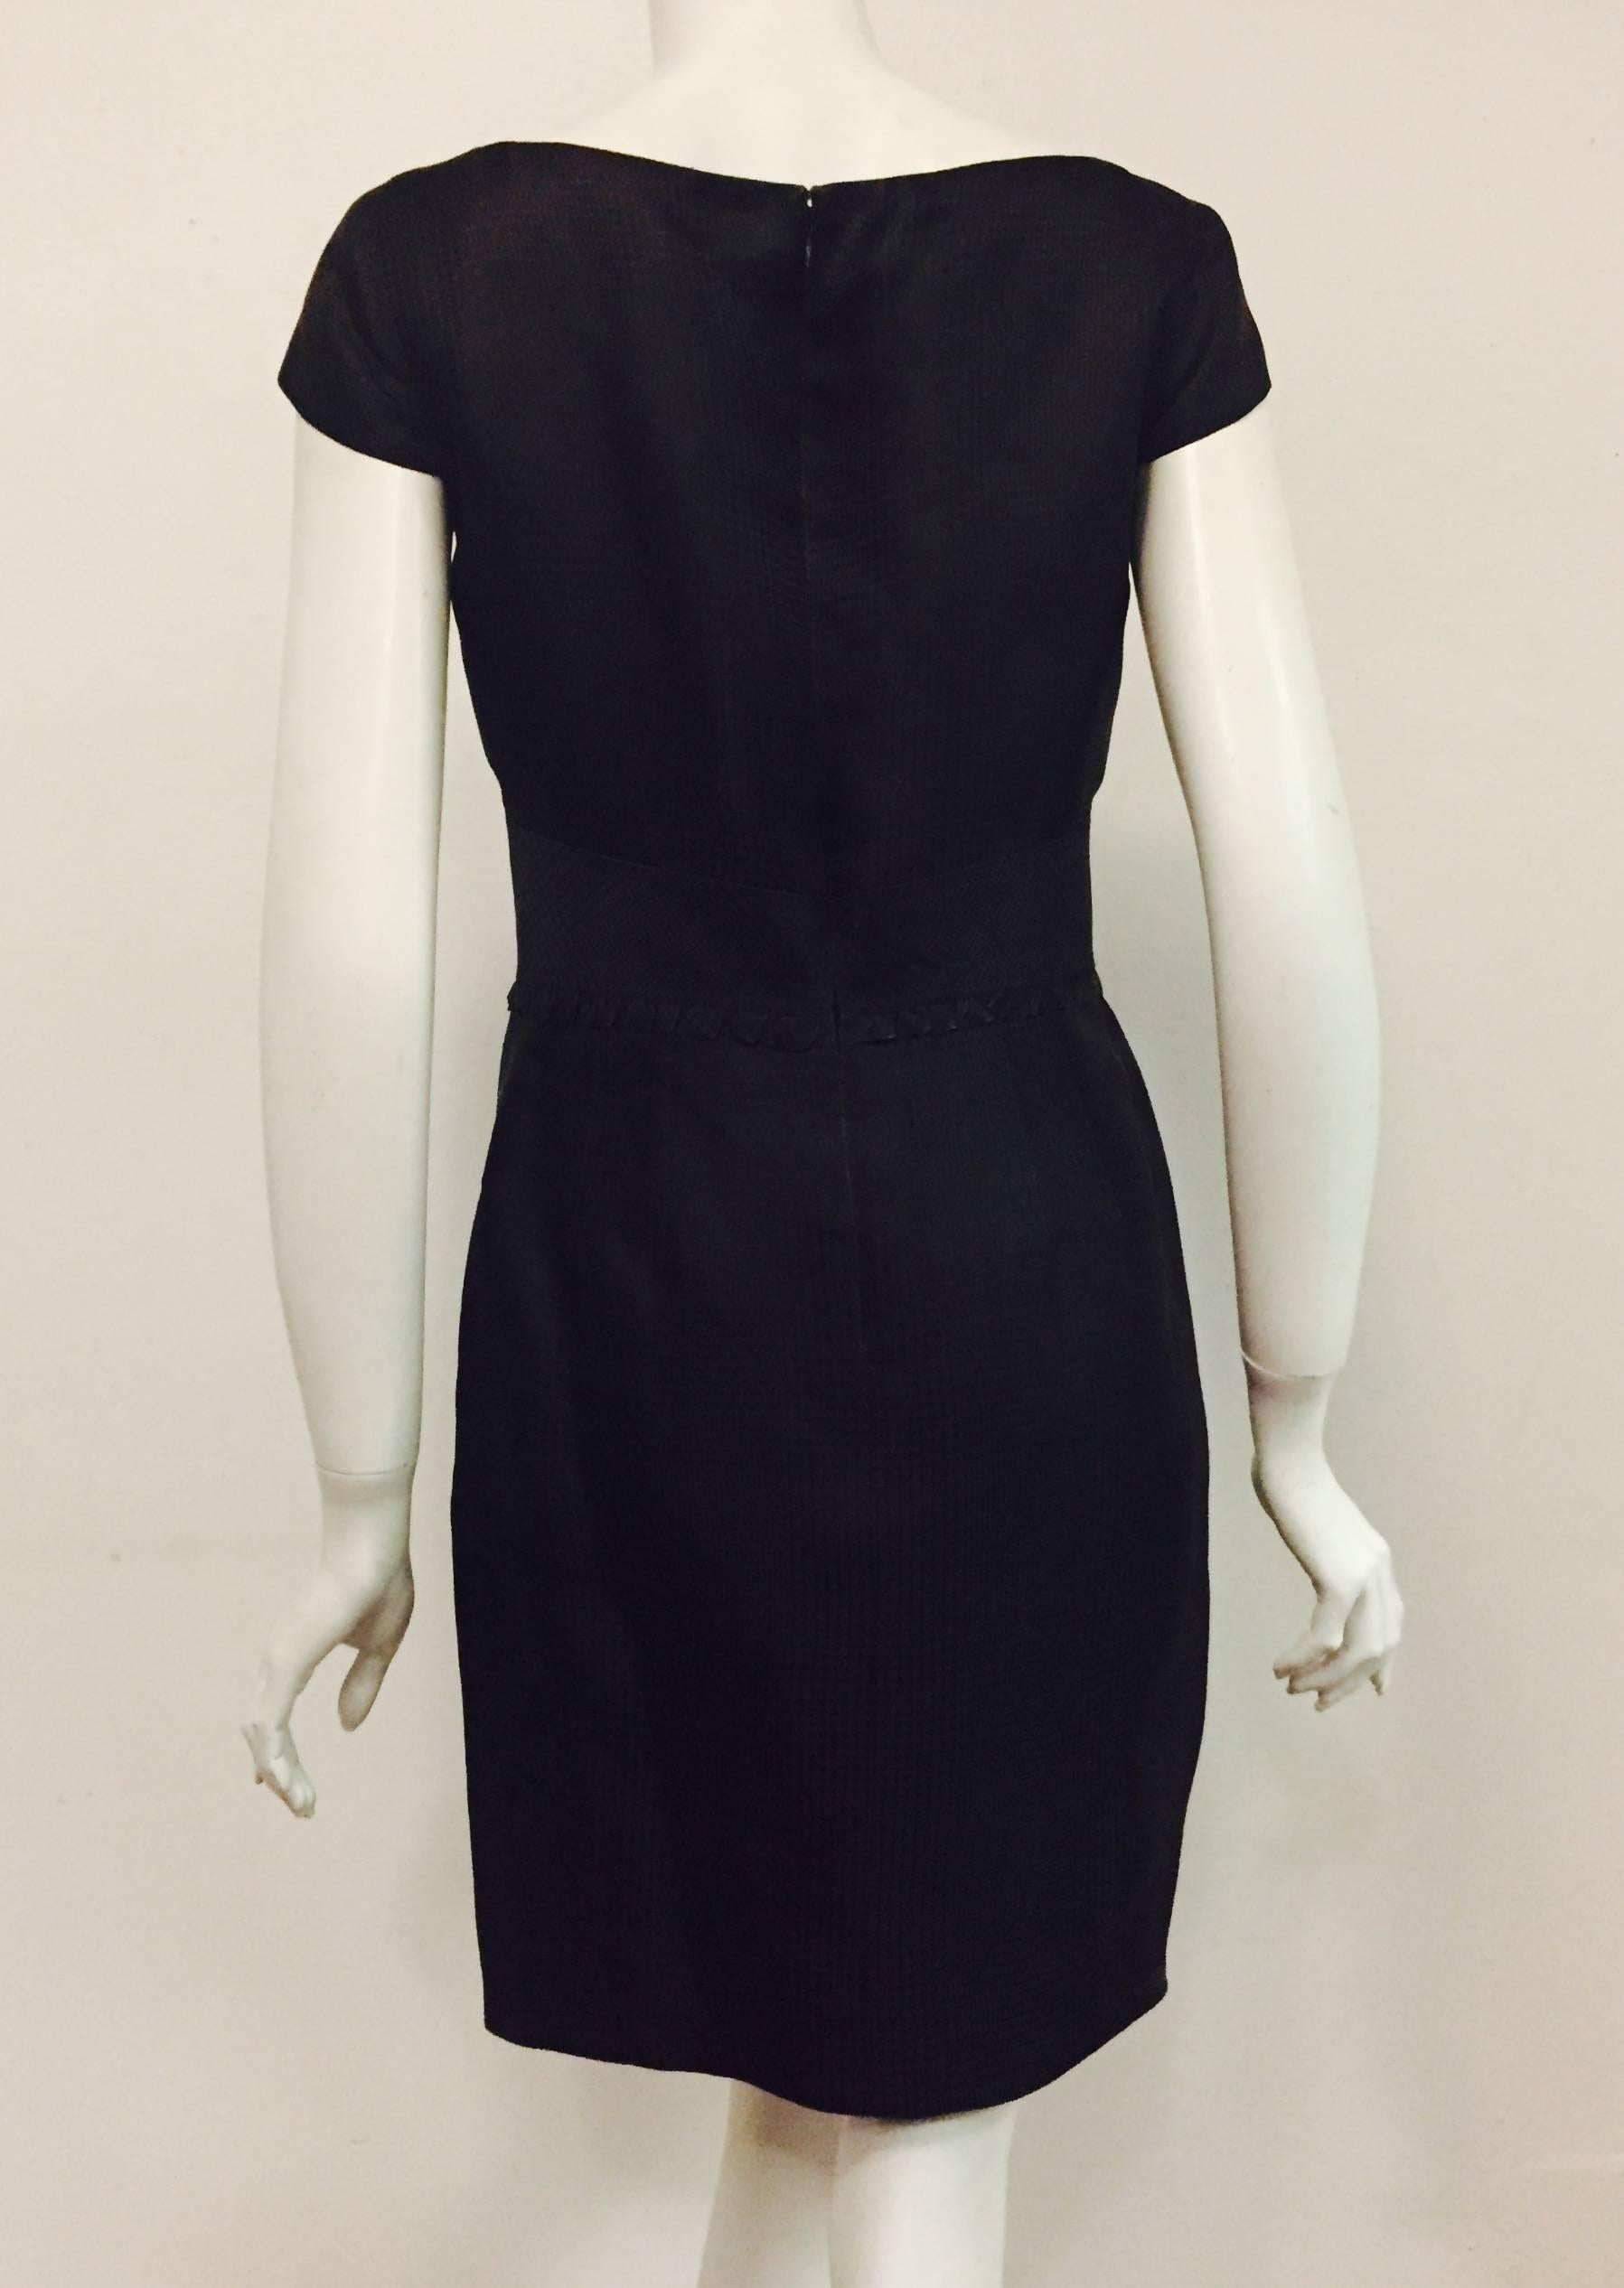 Black Sensational Zac Posen Grey Herringbone Pattern Cap Sleeve Dress For Sale